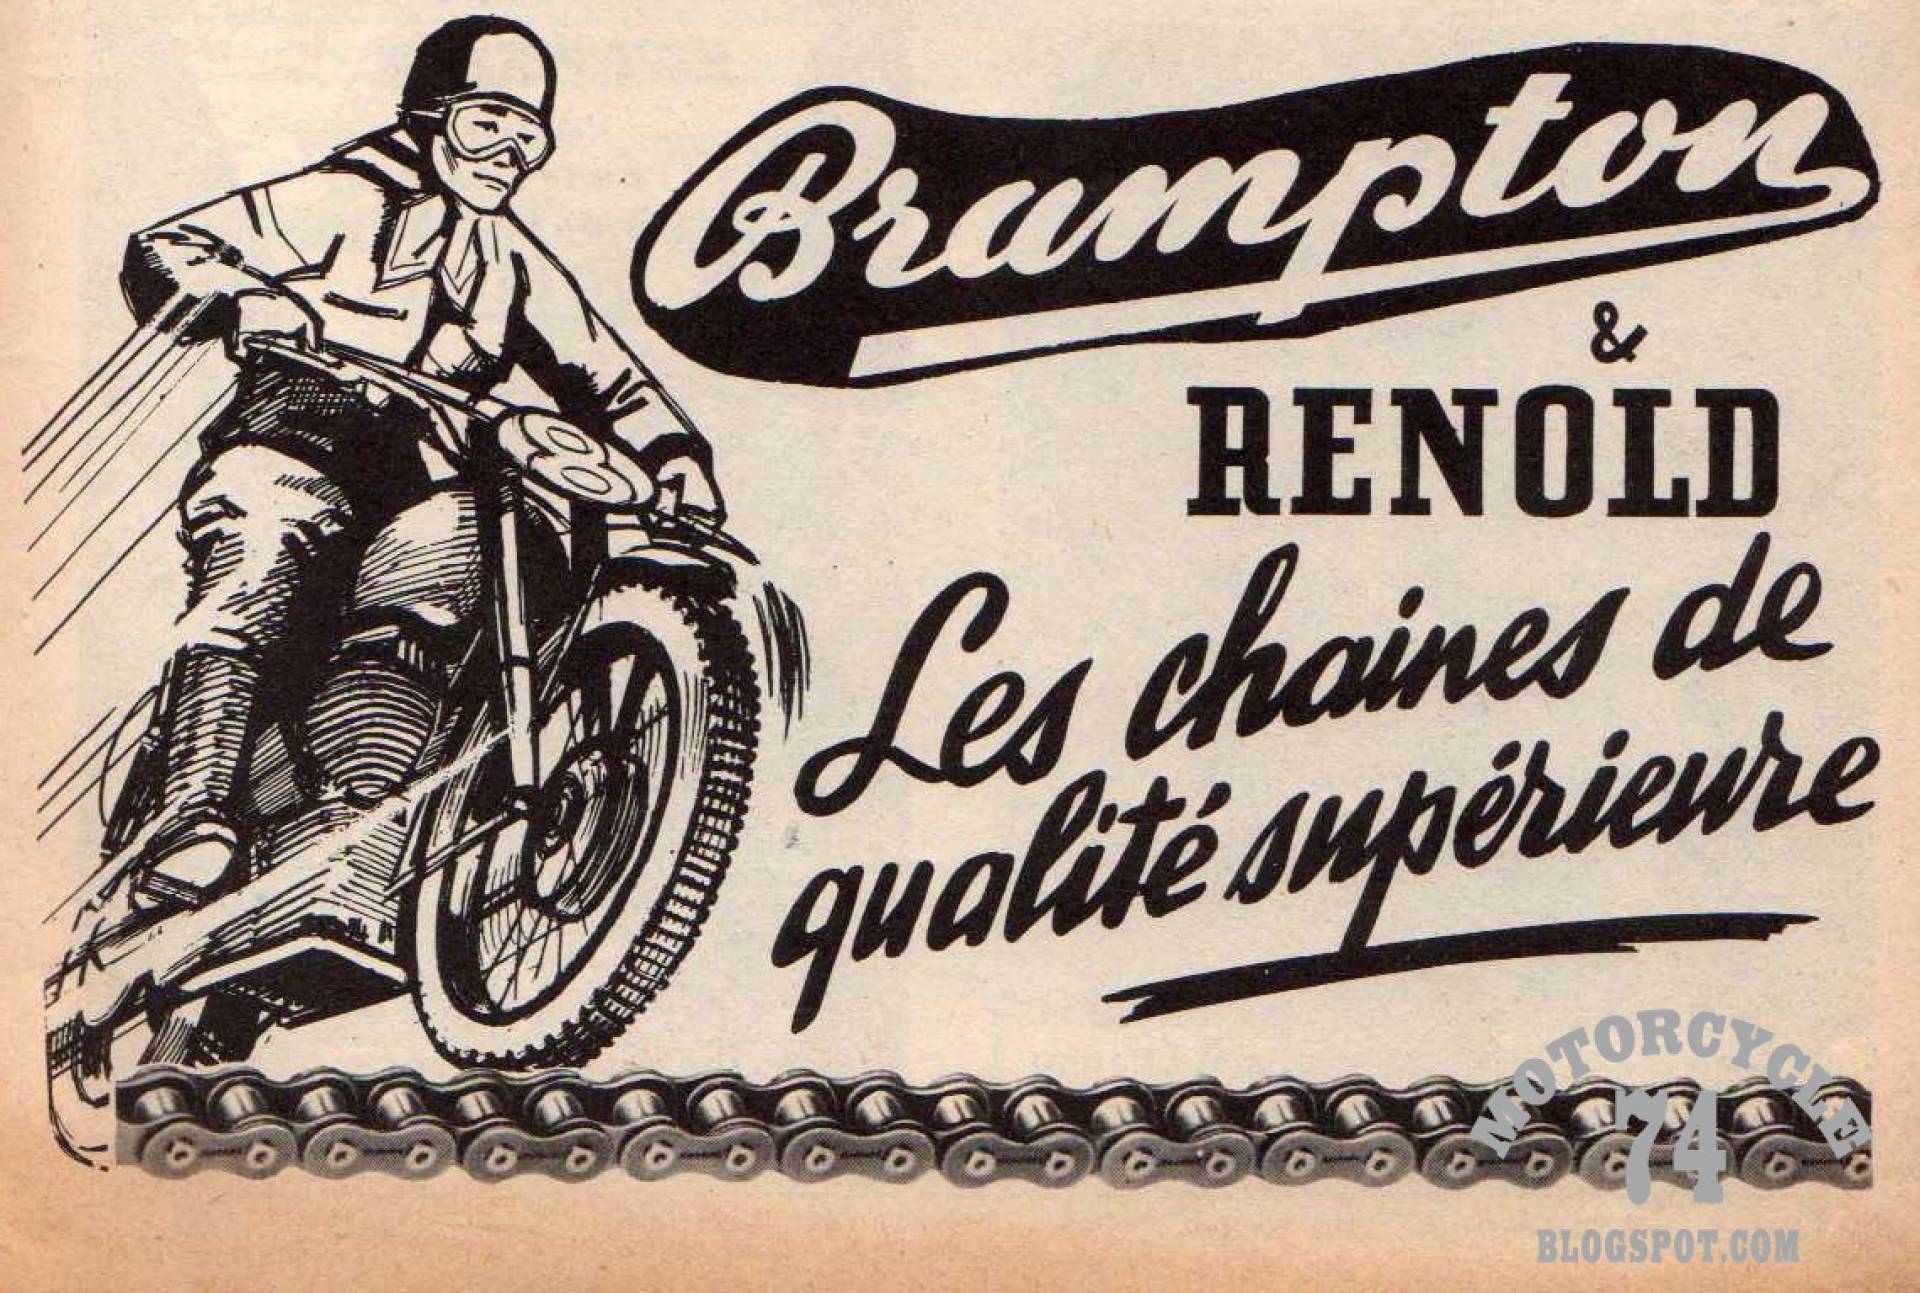 Motorcycle 74 brampton renold motorcycle chains vintage